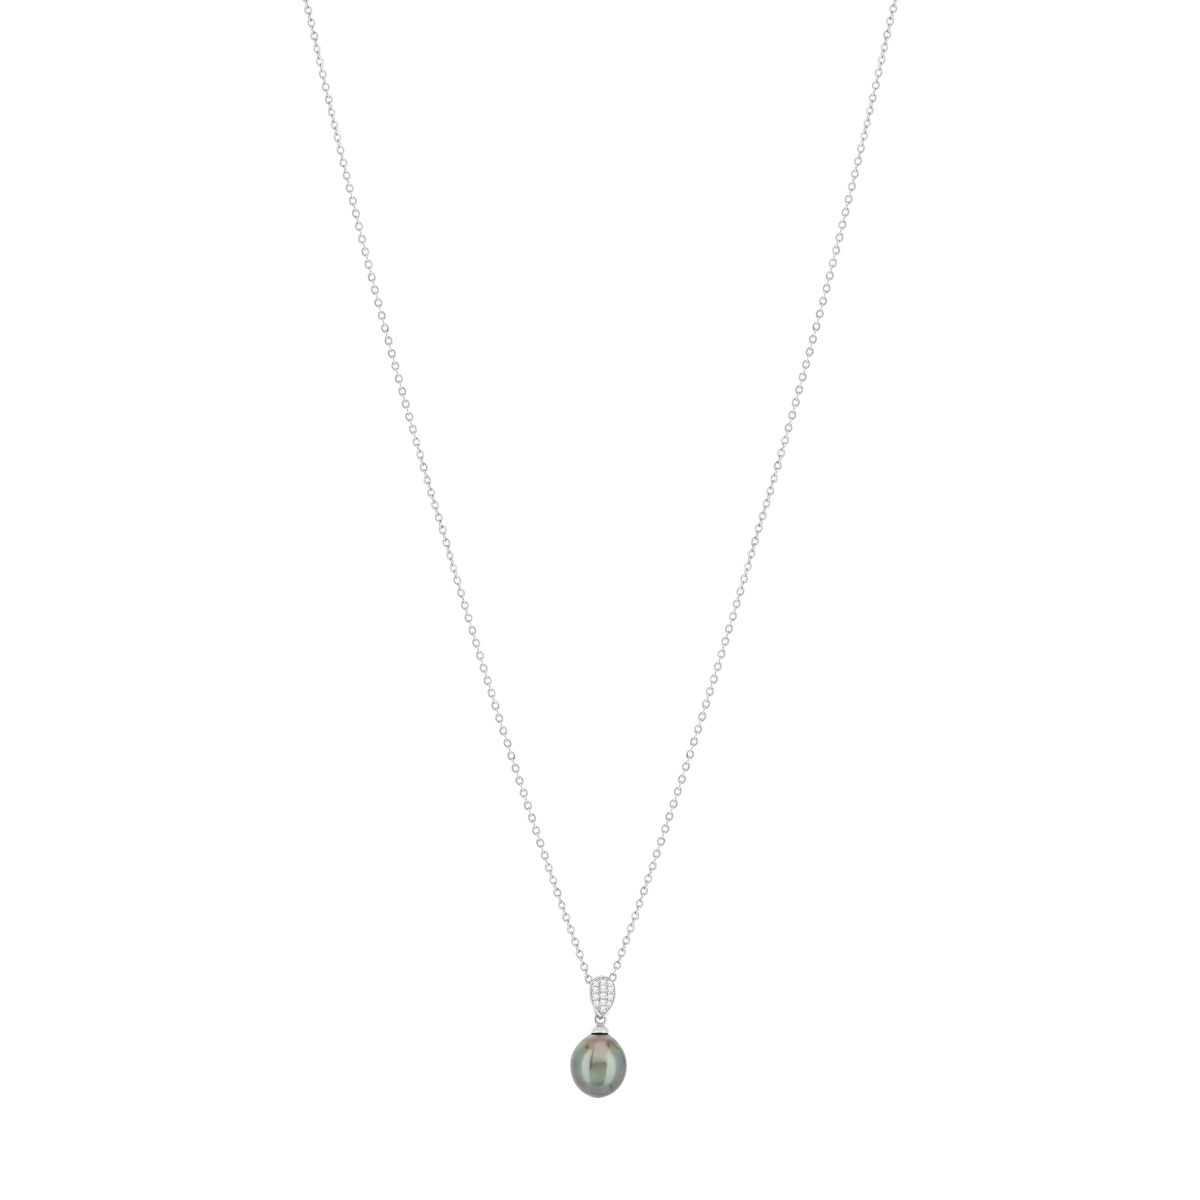 Collier argent 925 perle de culture de Tahiti zirconias 45cm - vue 2